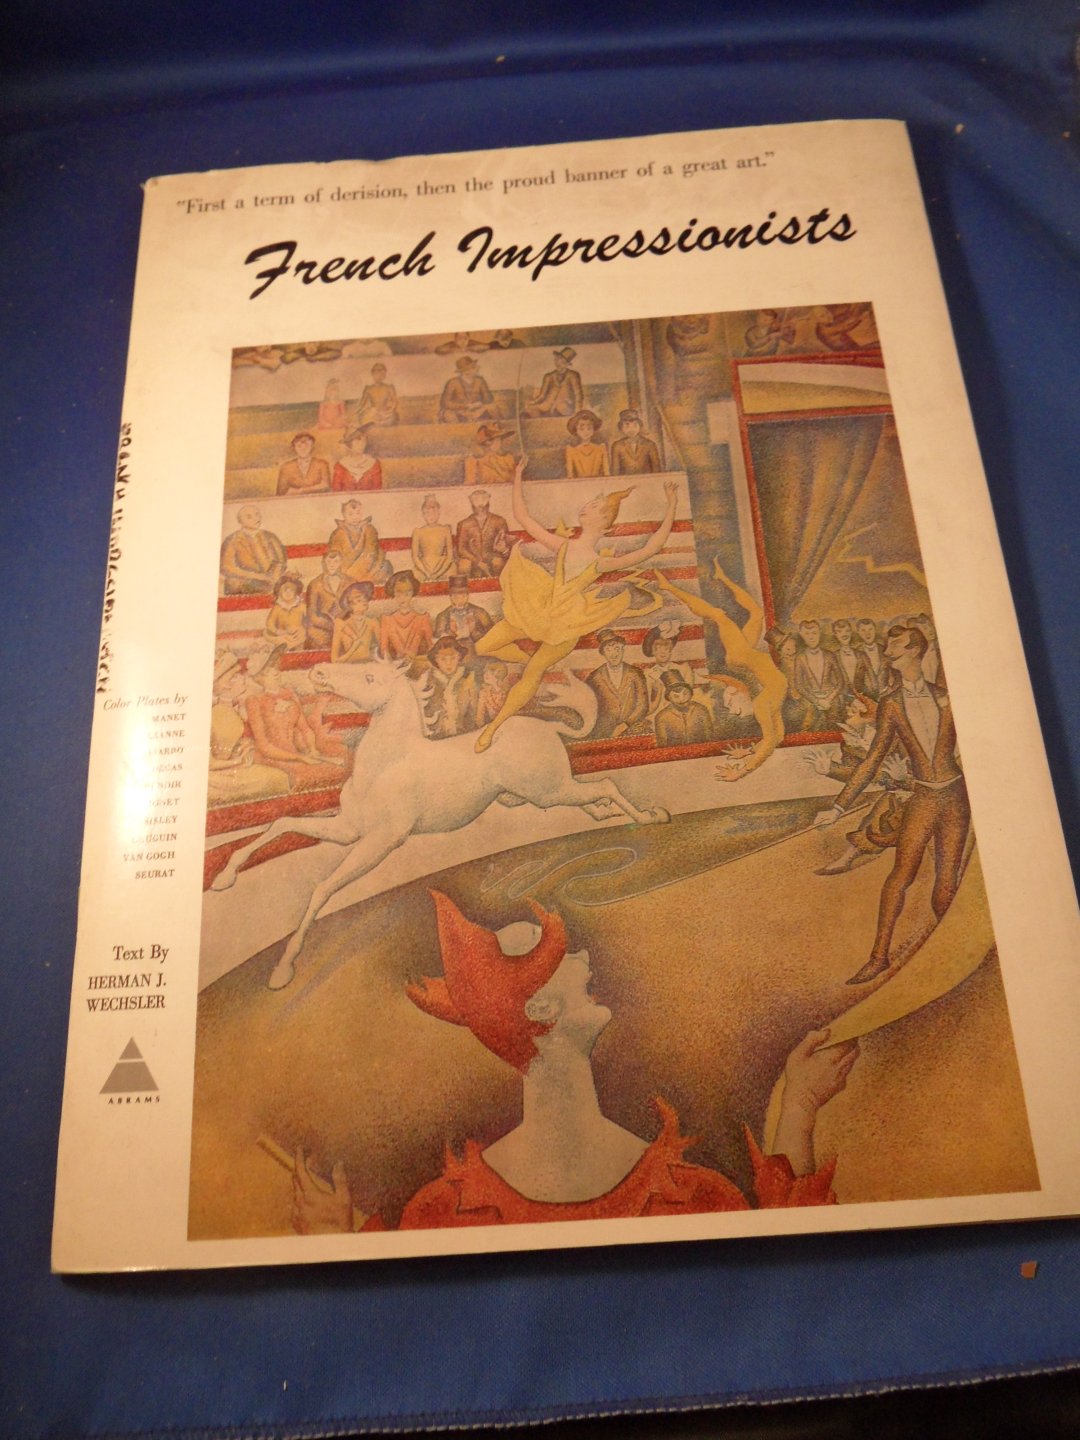 Wechsler, Herman J. - French Impressionists